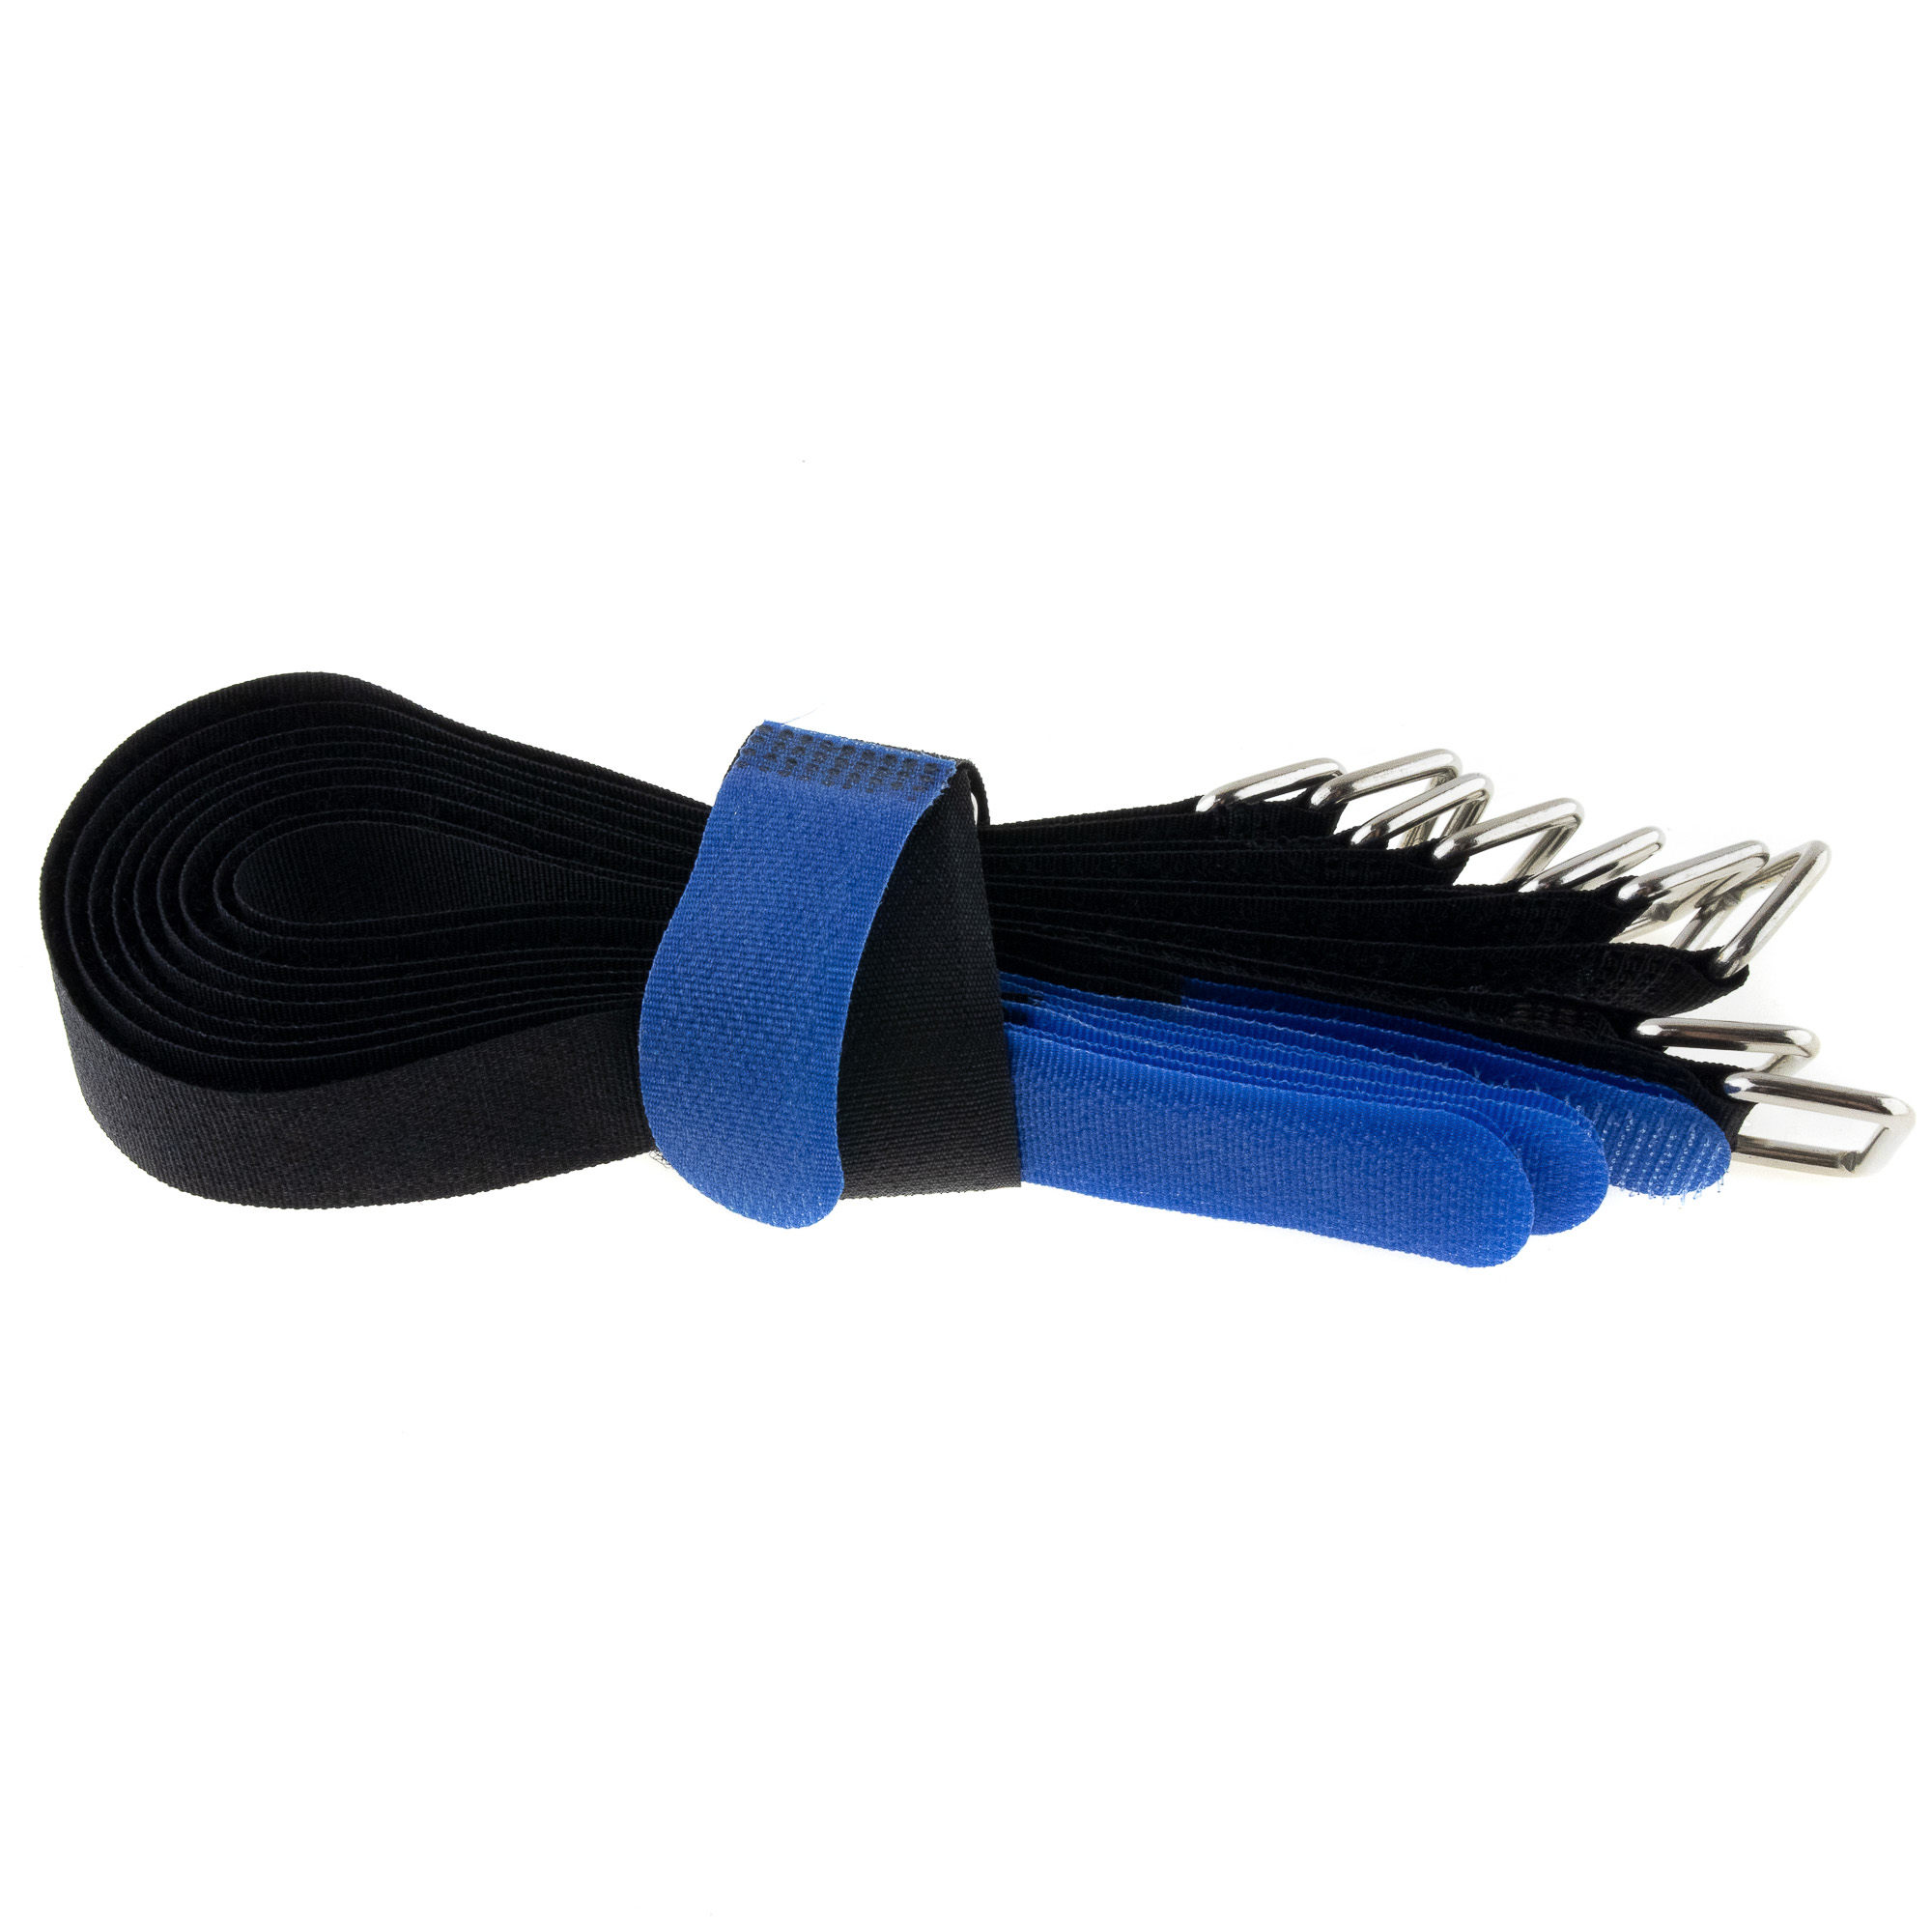 Hook-and-loop strap 300x20, black/blue, 10PCS